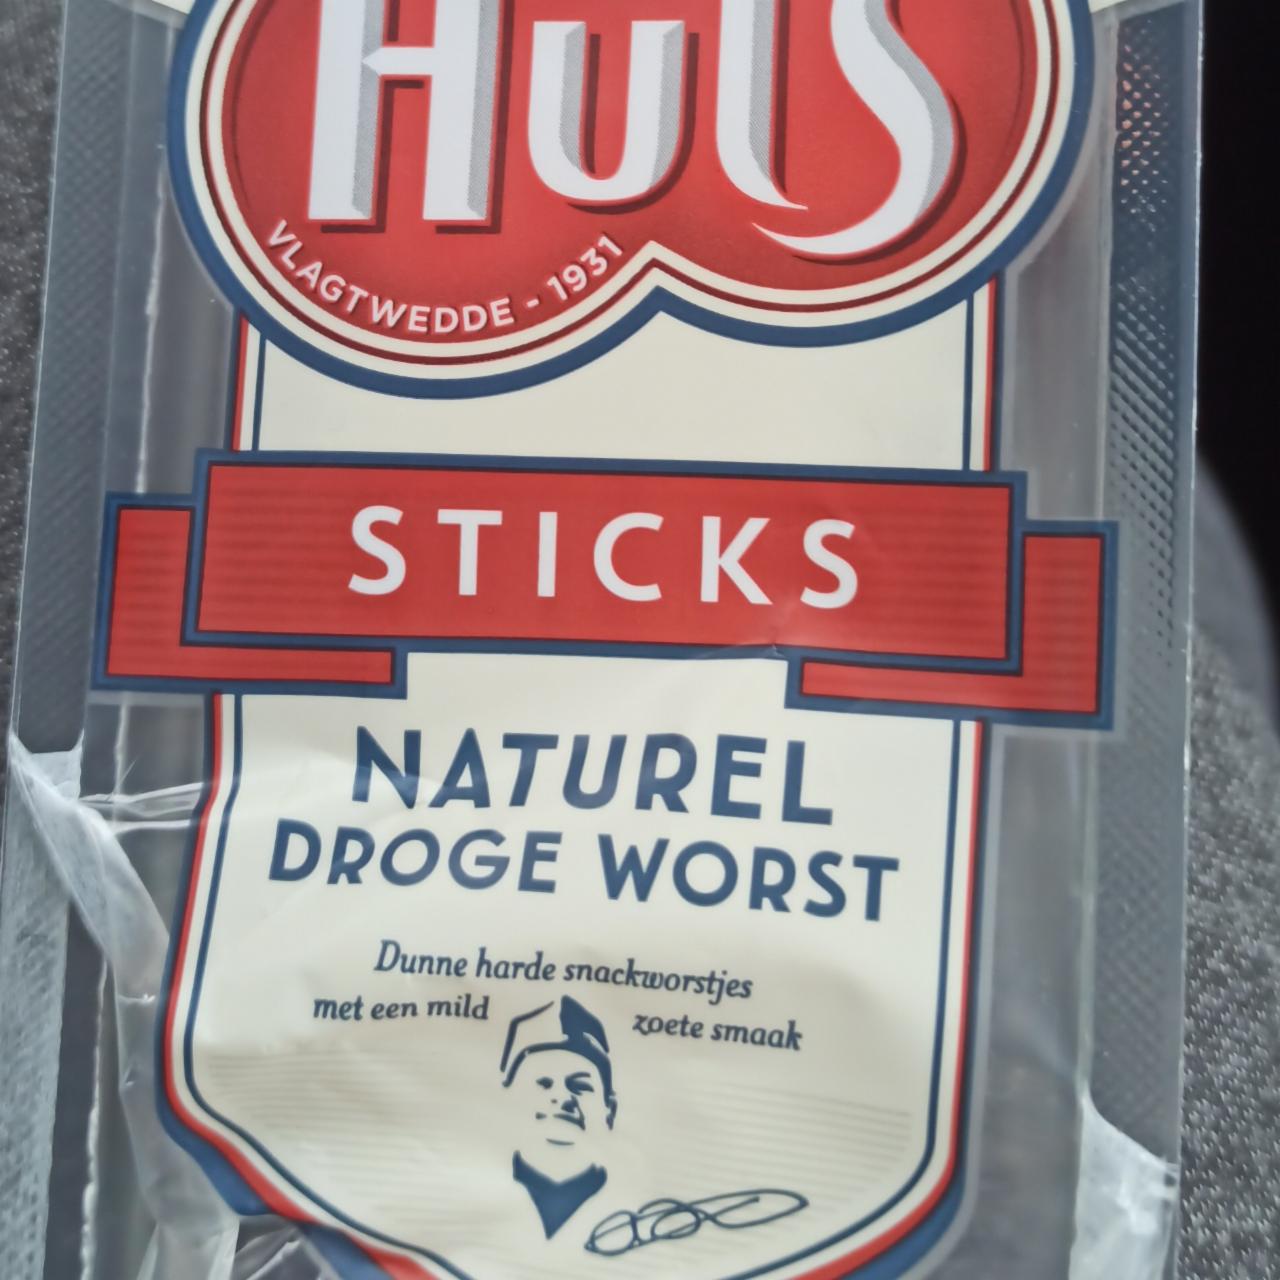 Fotografie - Sticks Naturel droge worst Huls